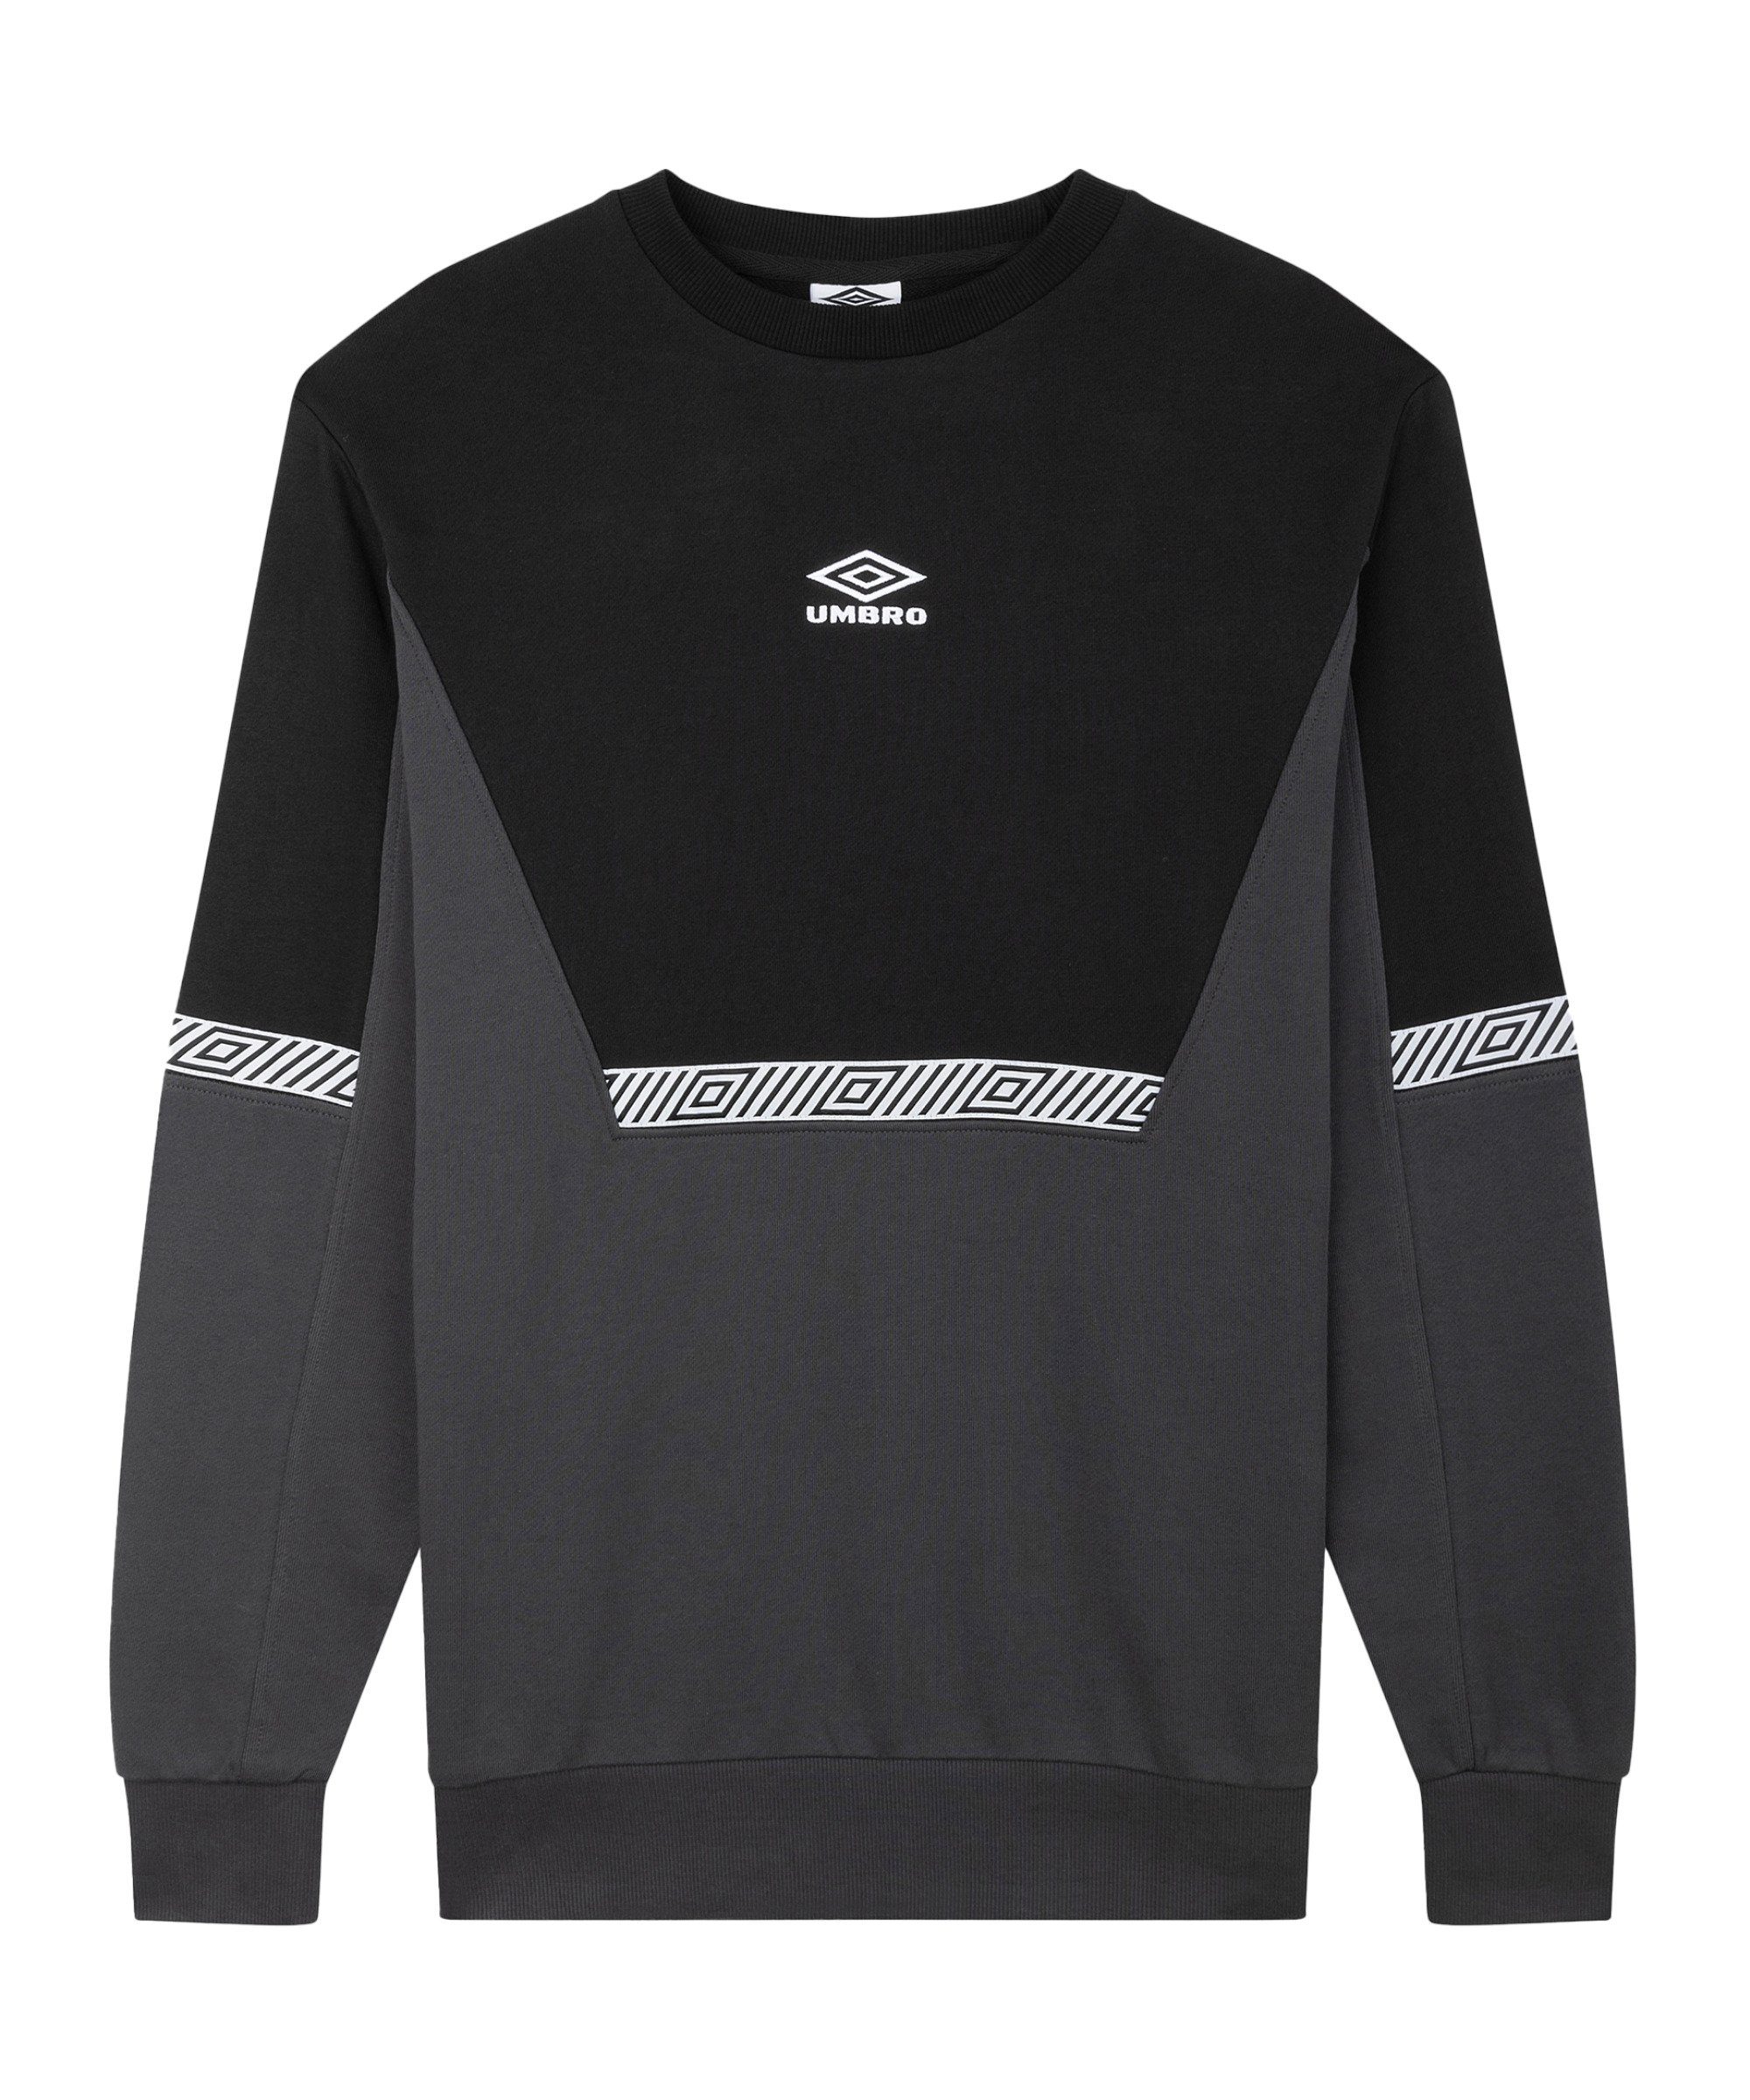 Umbro Sweatshirt Sports Style Club Sweatshirt grauschwarz